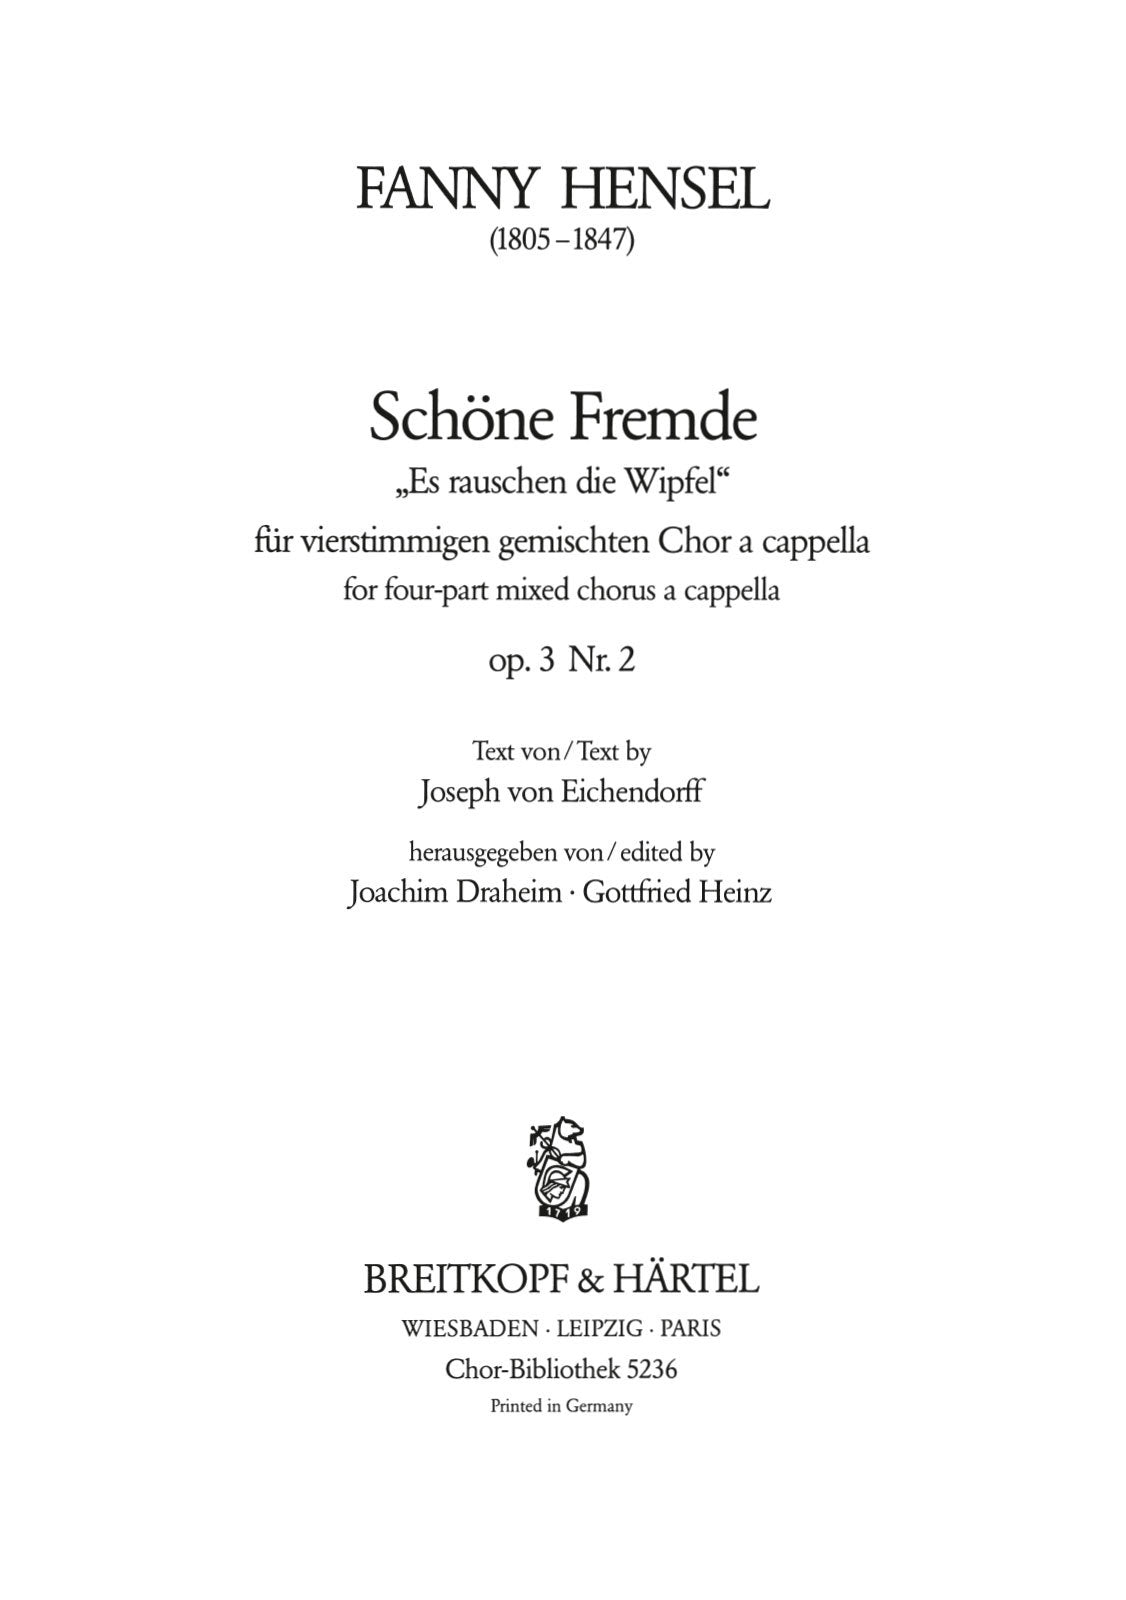 Hensel: Schöne Fremde, Op. 3, No. 2